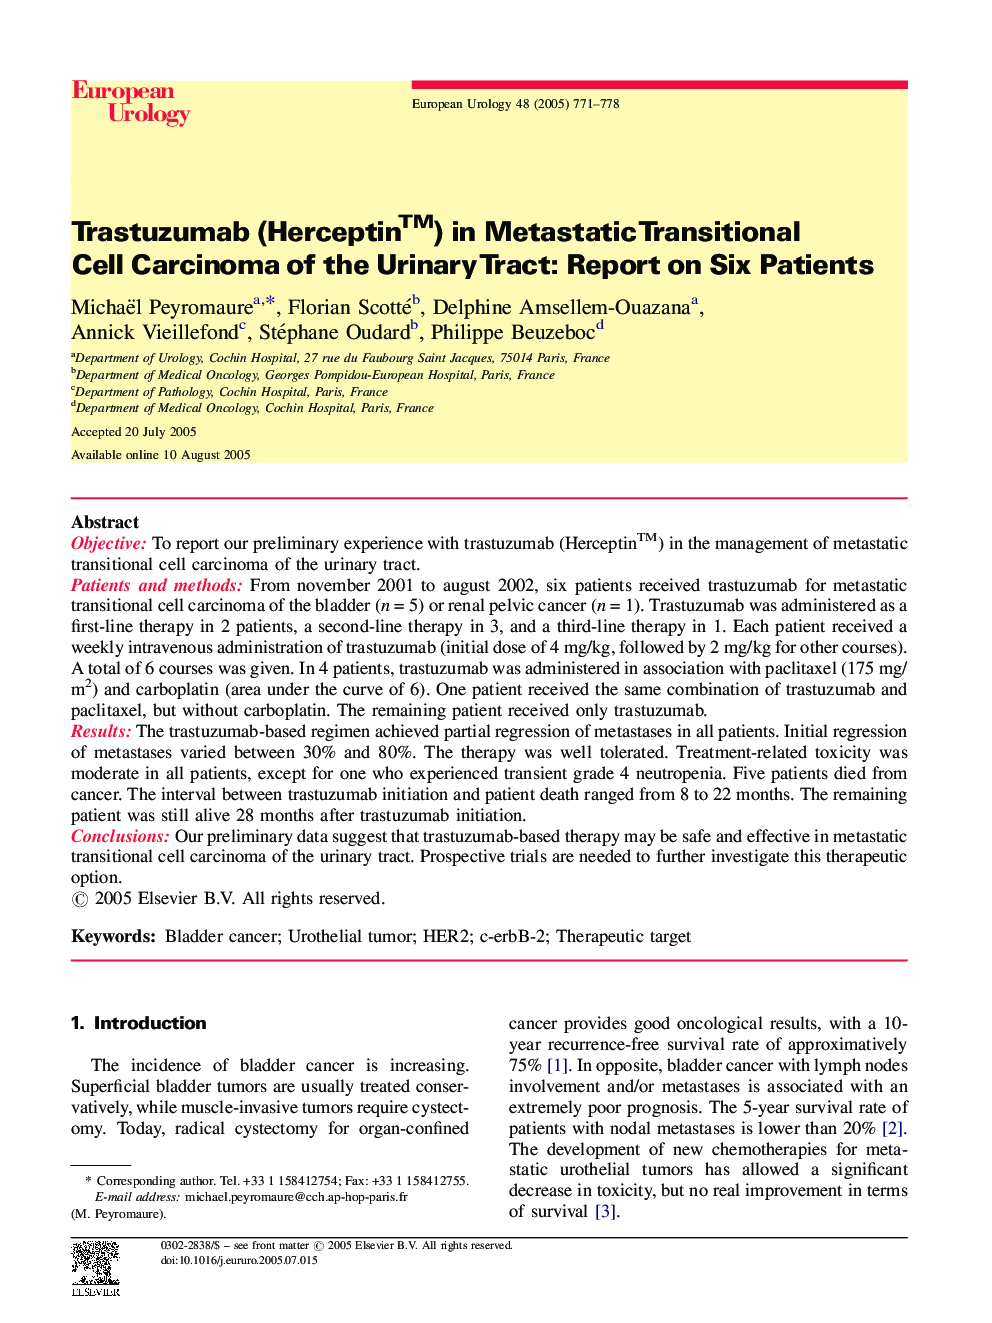 Trastuzumab (Herceptinâ¢) in Metastatic Transitional Cell Carcinoma of the Urinary Tract: Report on Six Patients